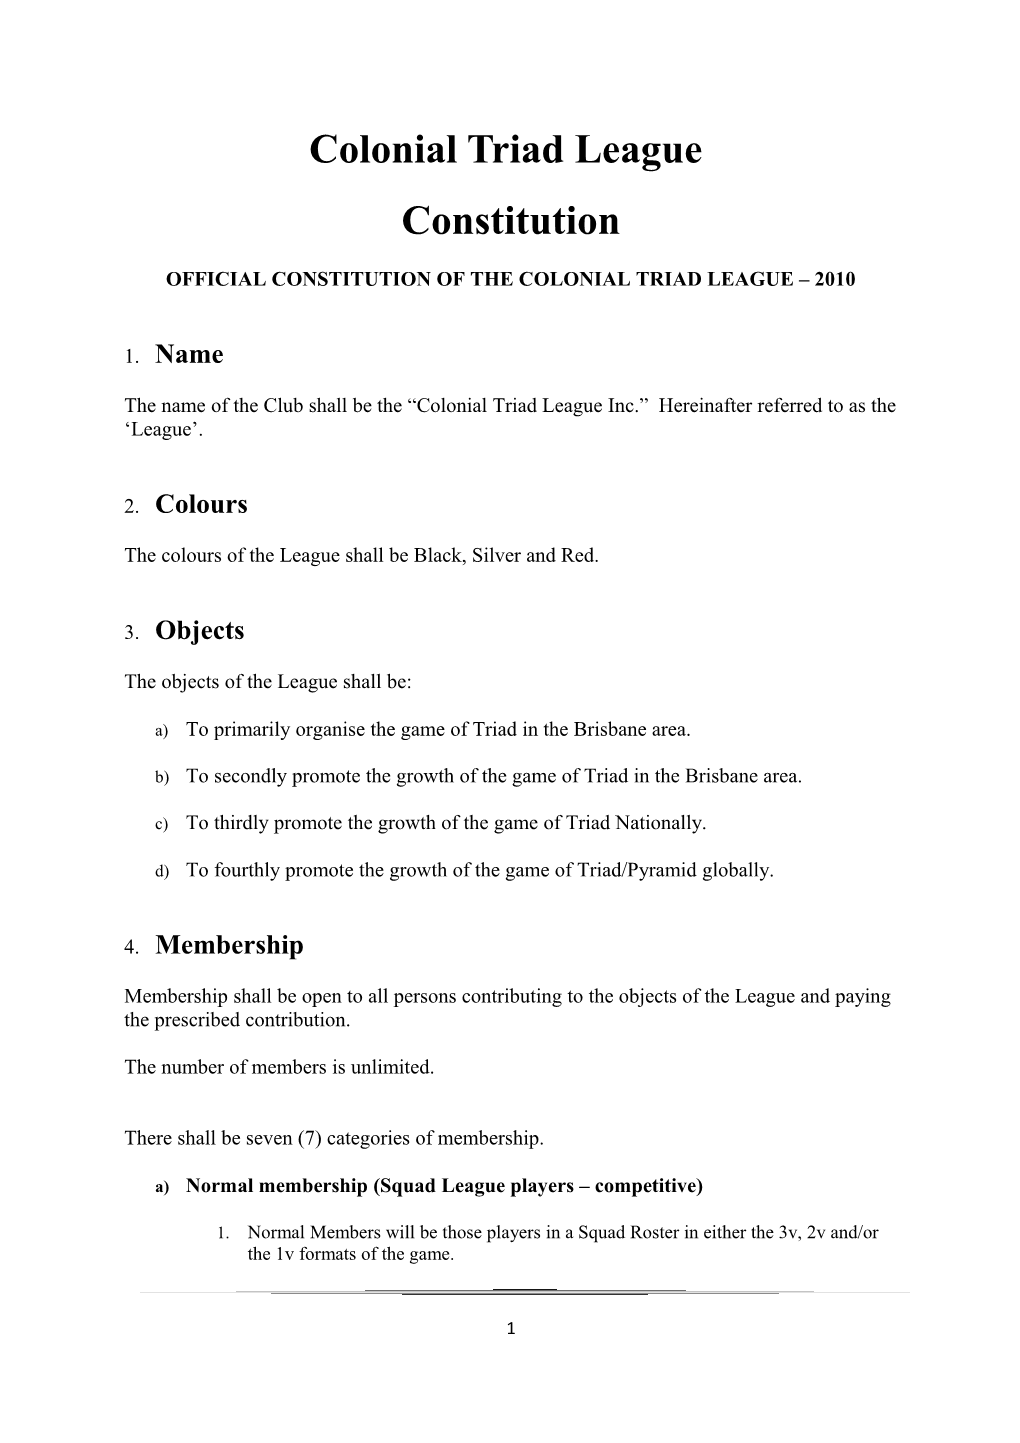 Colonial Triad League Brisbane Division Constitution